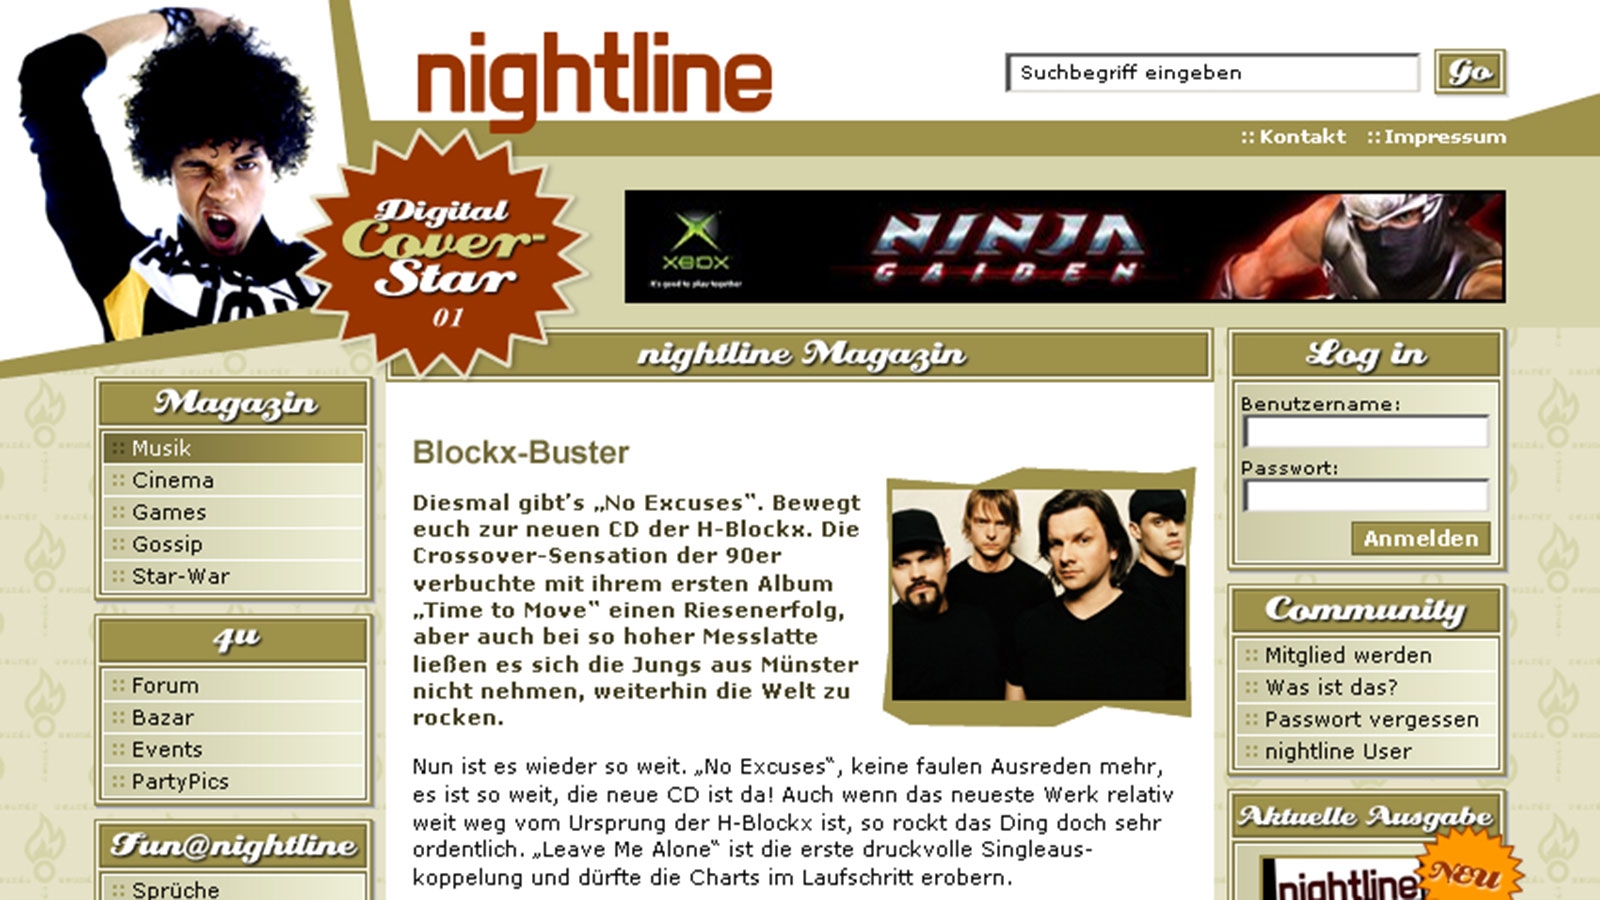 Nightline | nightline.cc | 2004 (Screen Only 01) © echonet communication